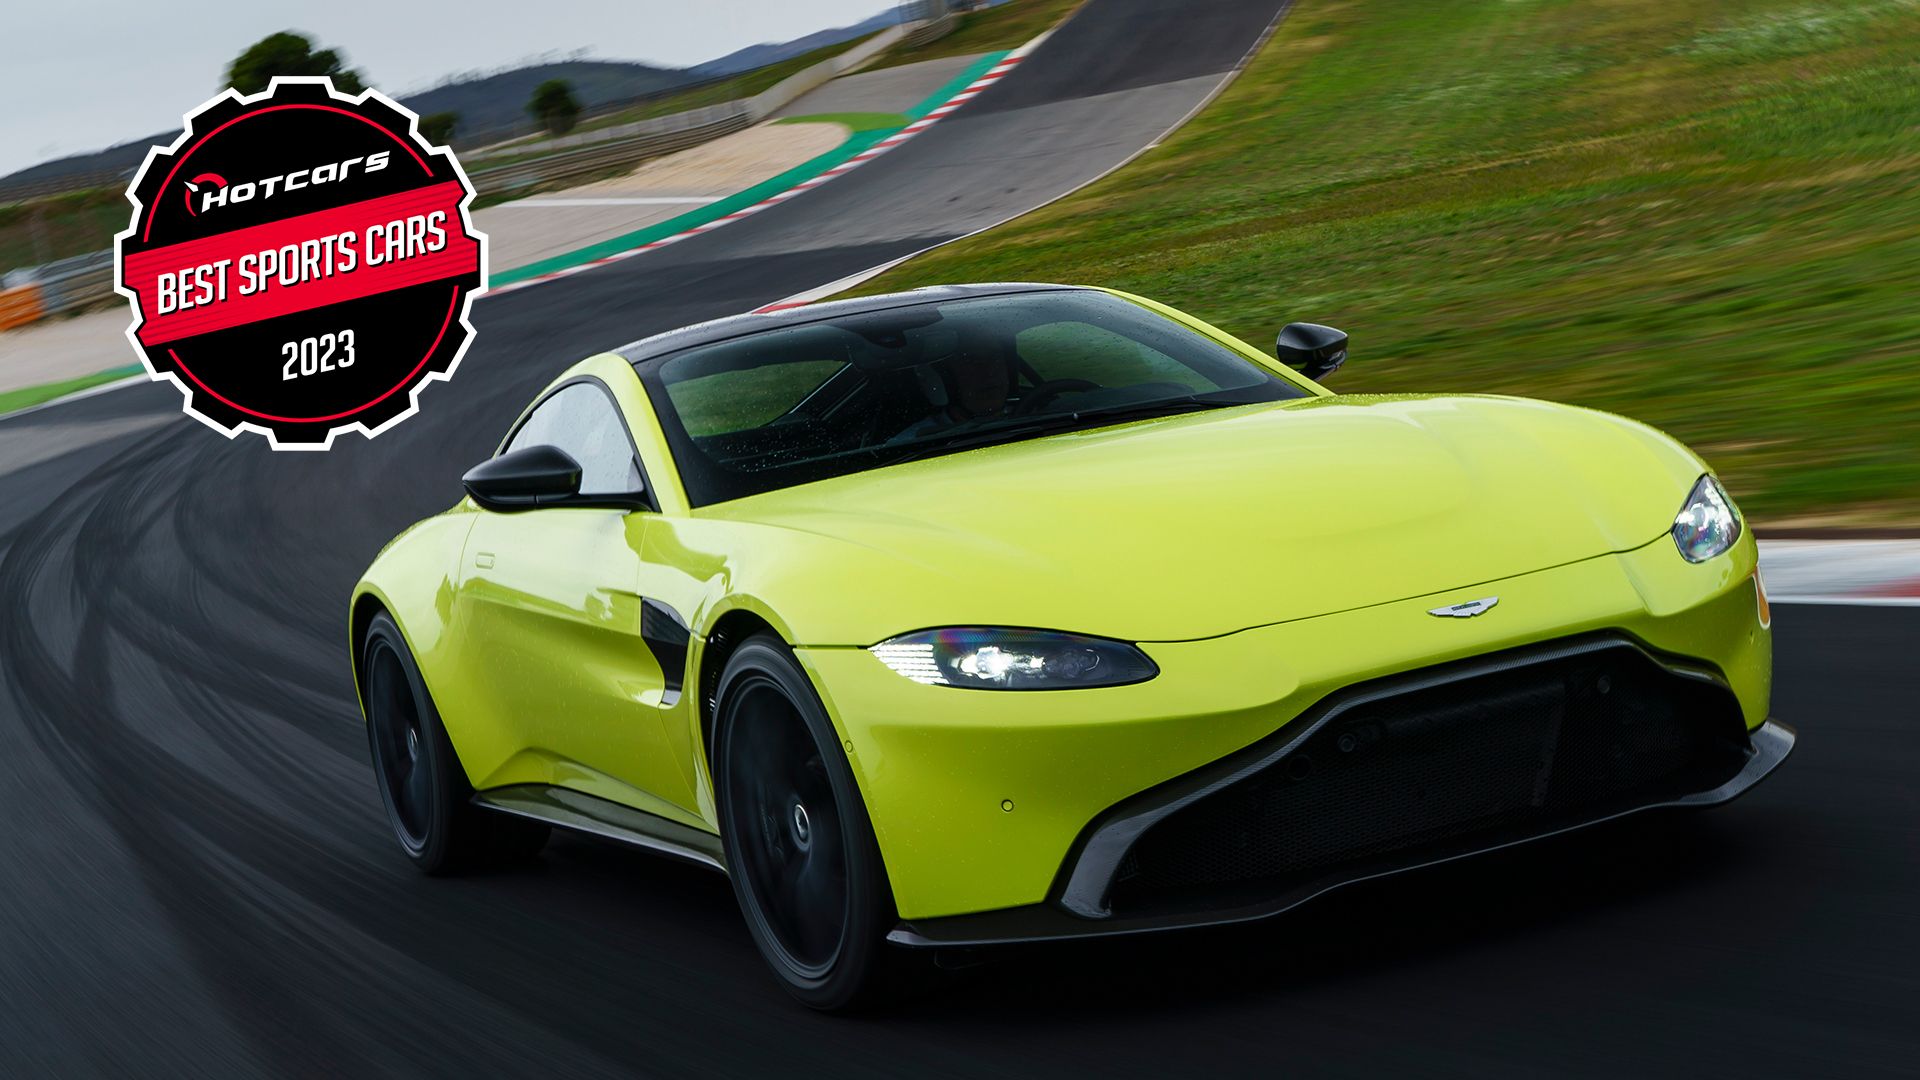 Lime Aston Martin Vantage driving on track